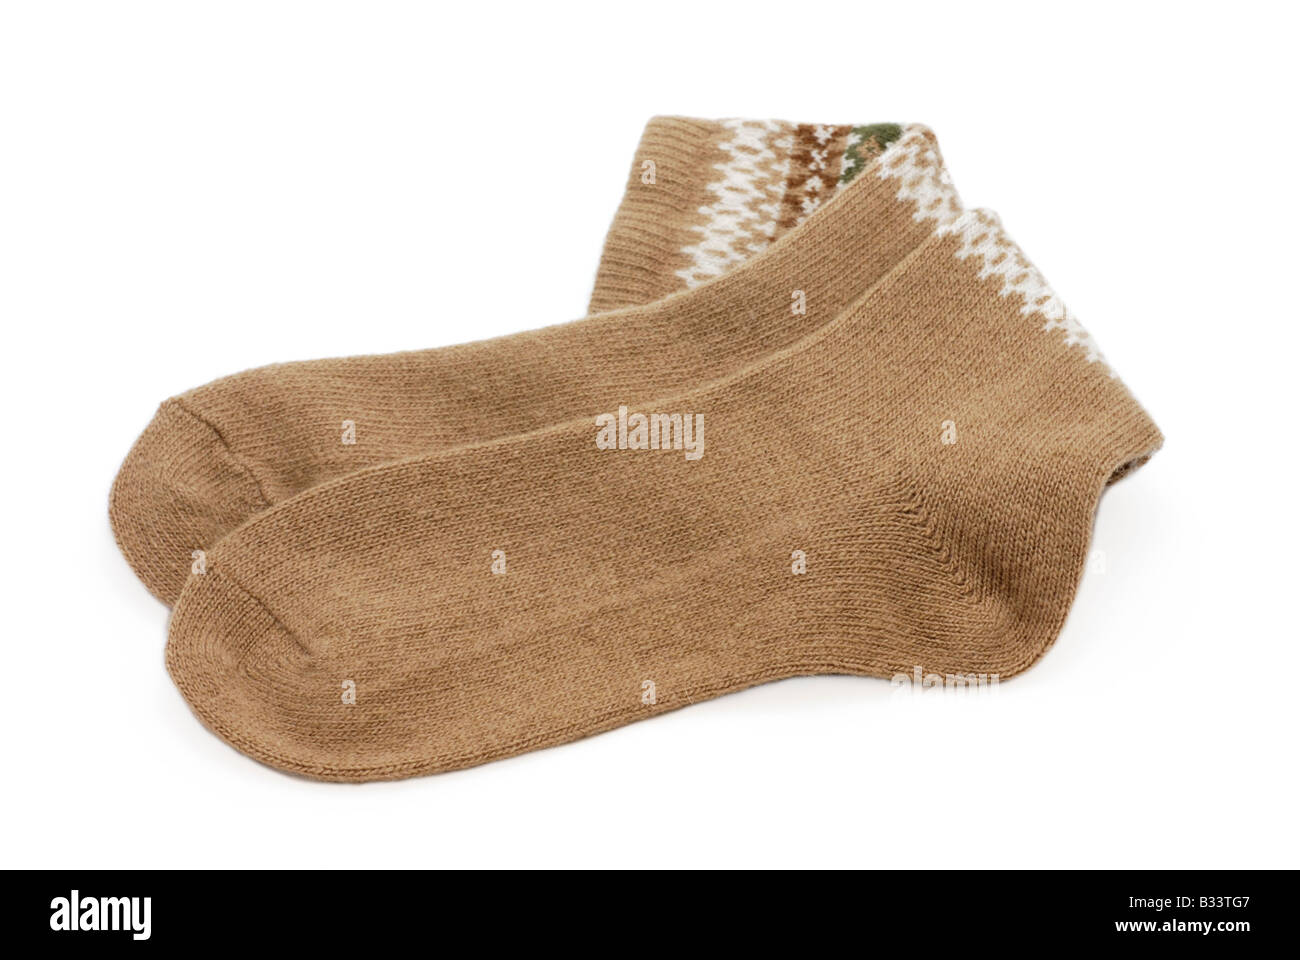 Pair of Woolen Winter Socks Stock Photo